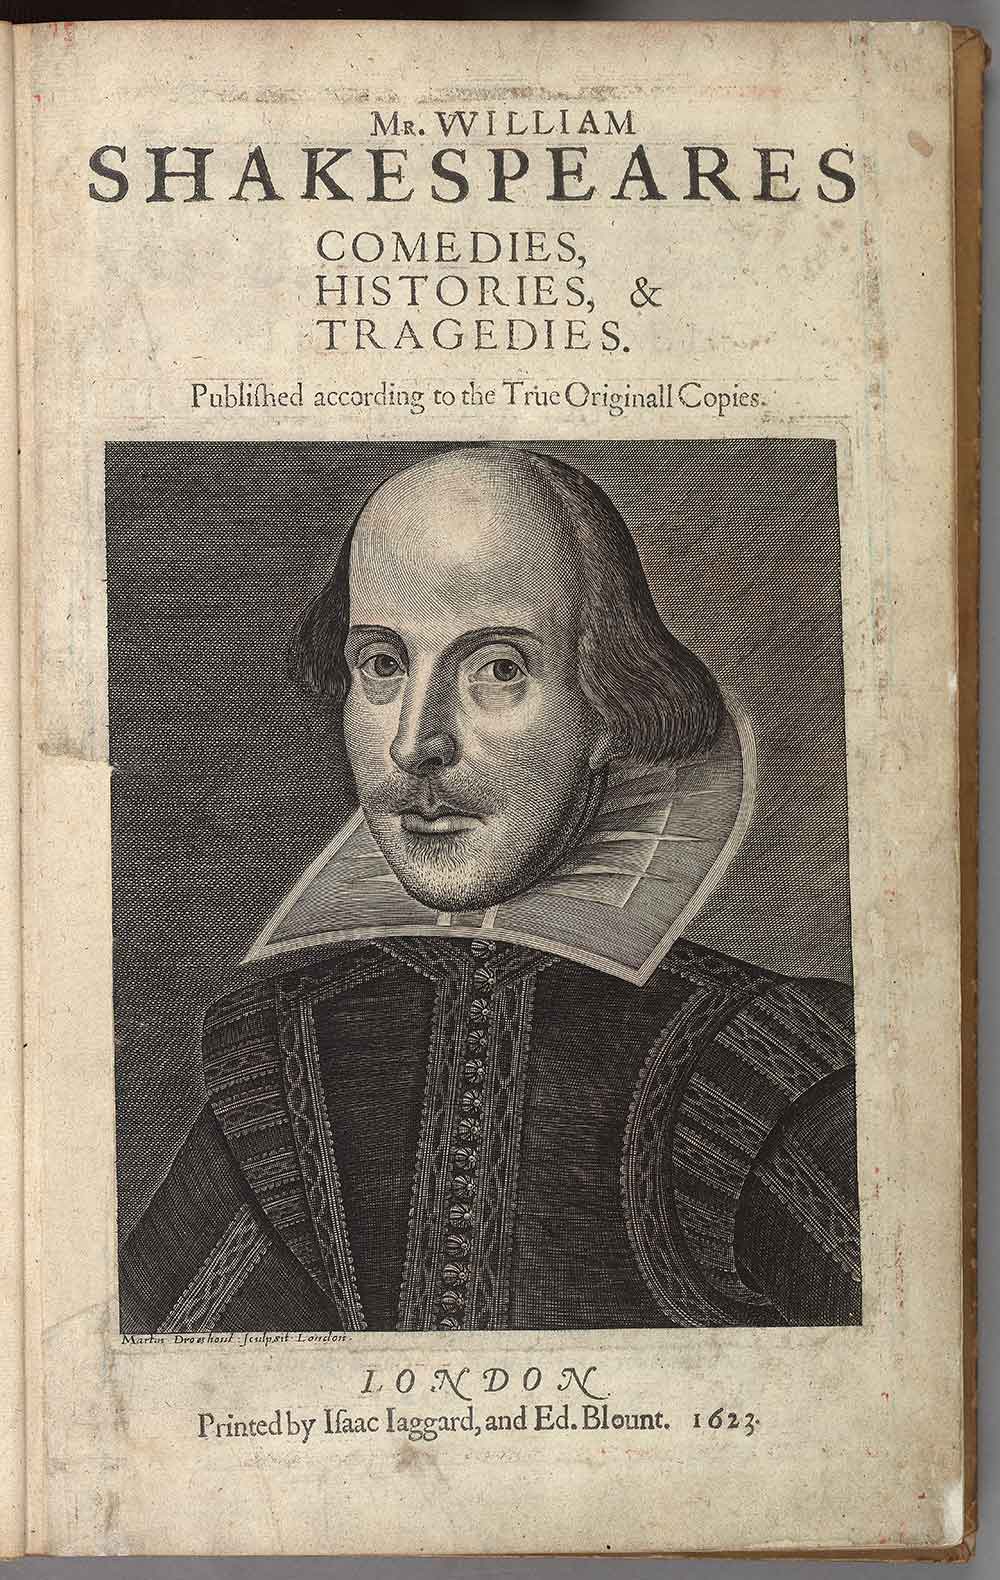 Frontispiece of Mr. William Shakespeares comedies, histories, & tragedies.